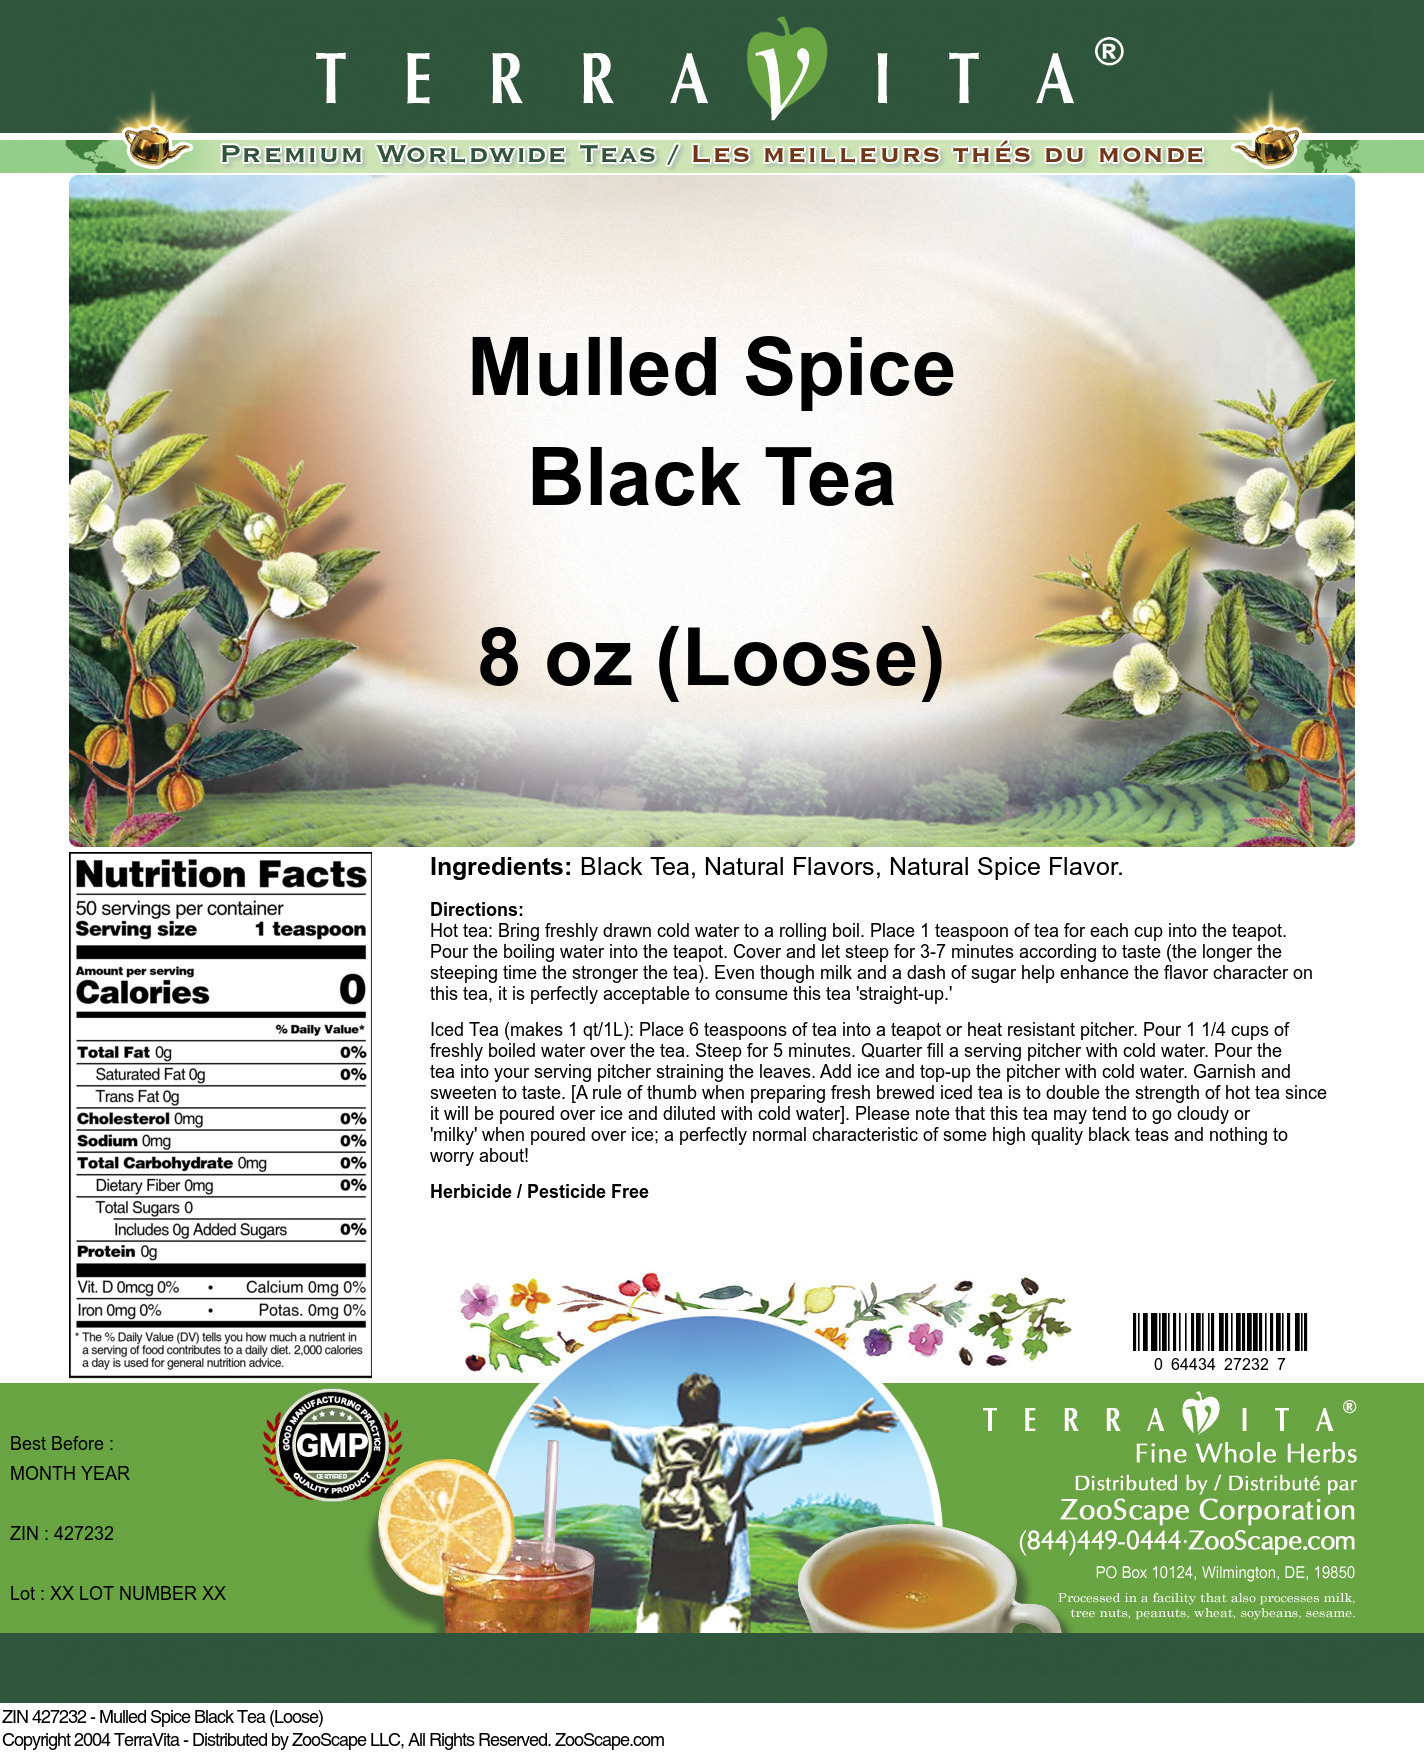 Mulled Spice Black Tea (Loose) - Label